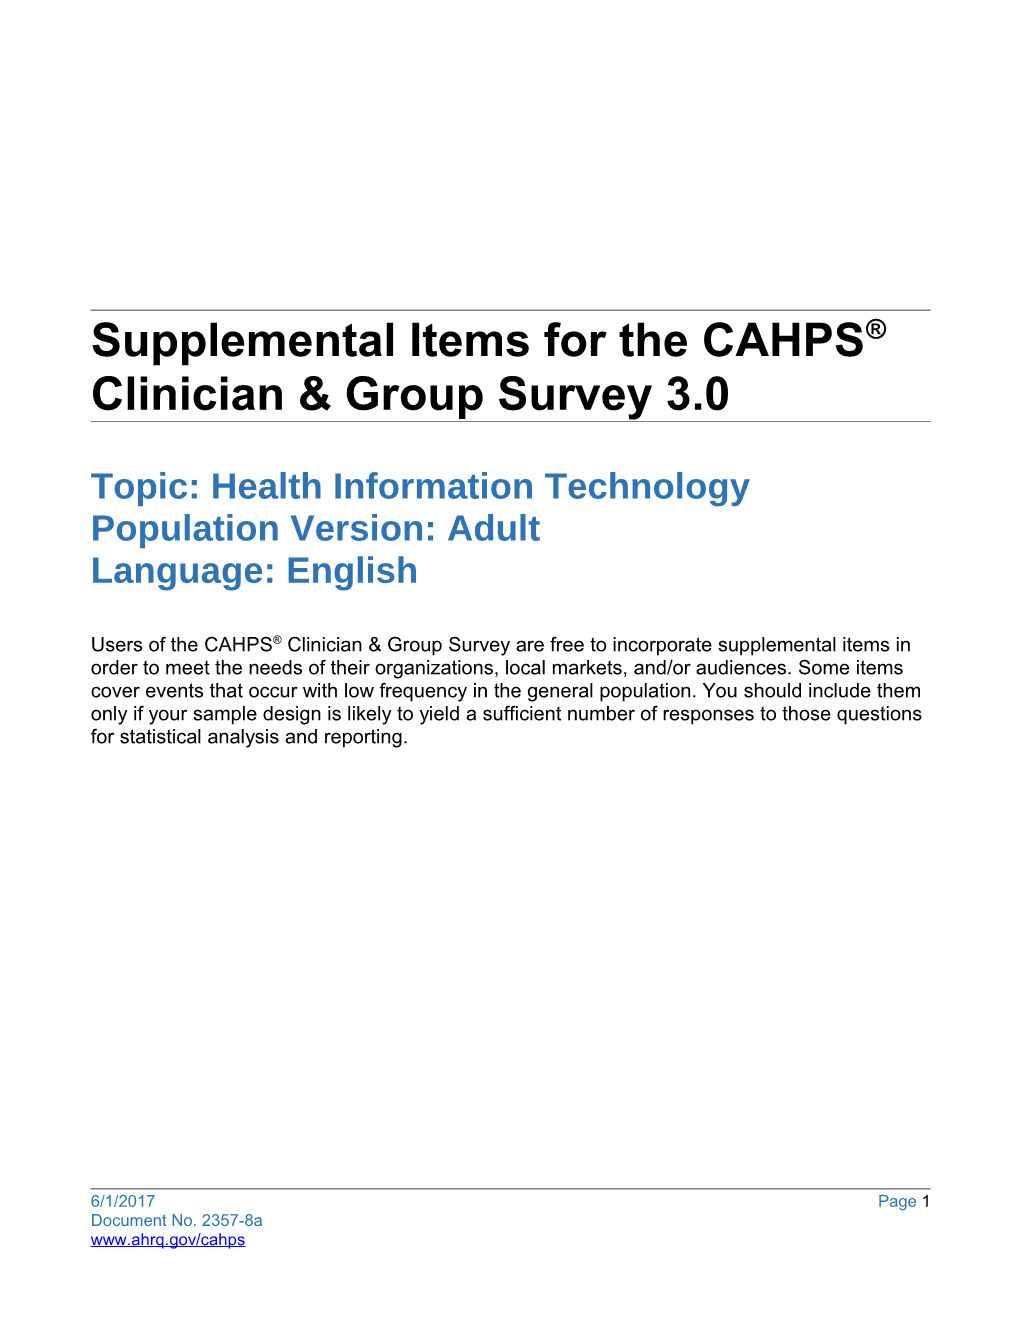 CAHPS Clinician & Group Survey 3.0Supplemental Items: Health Information Technology